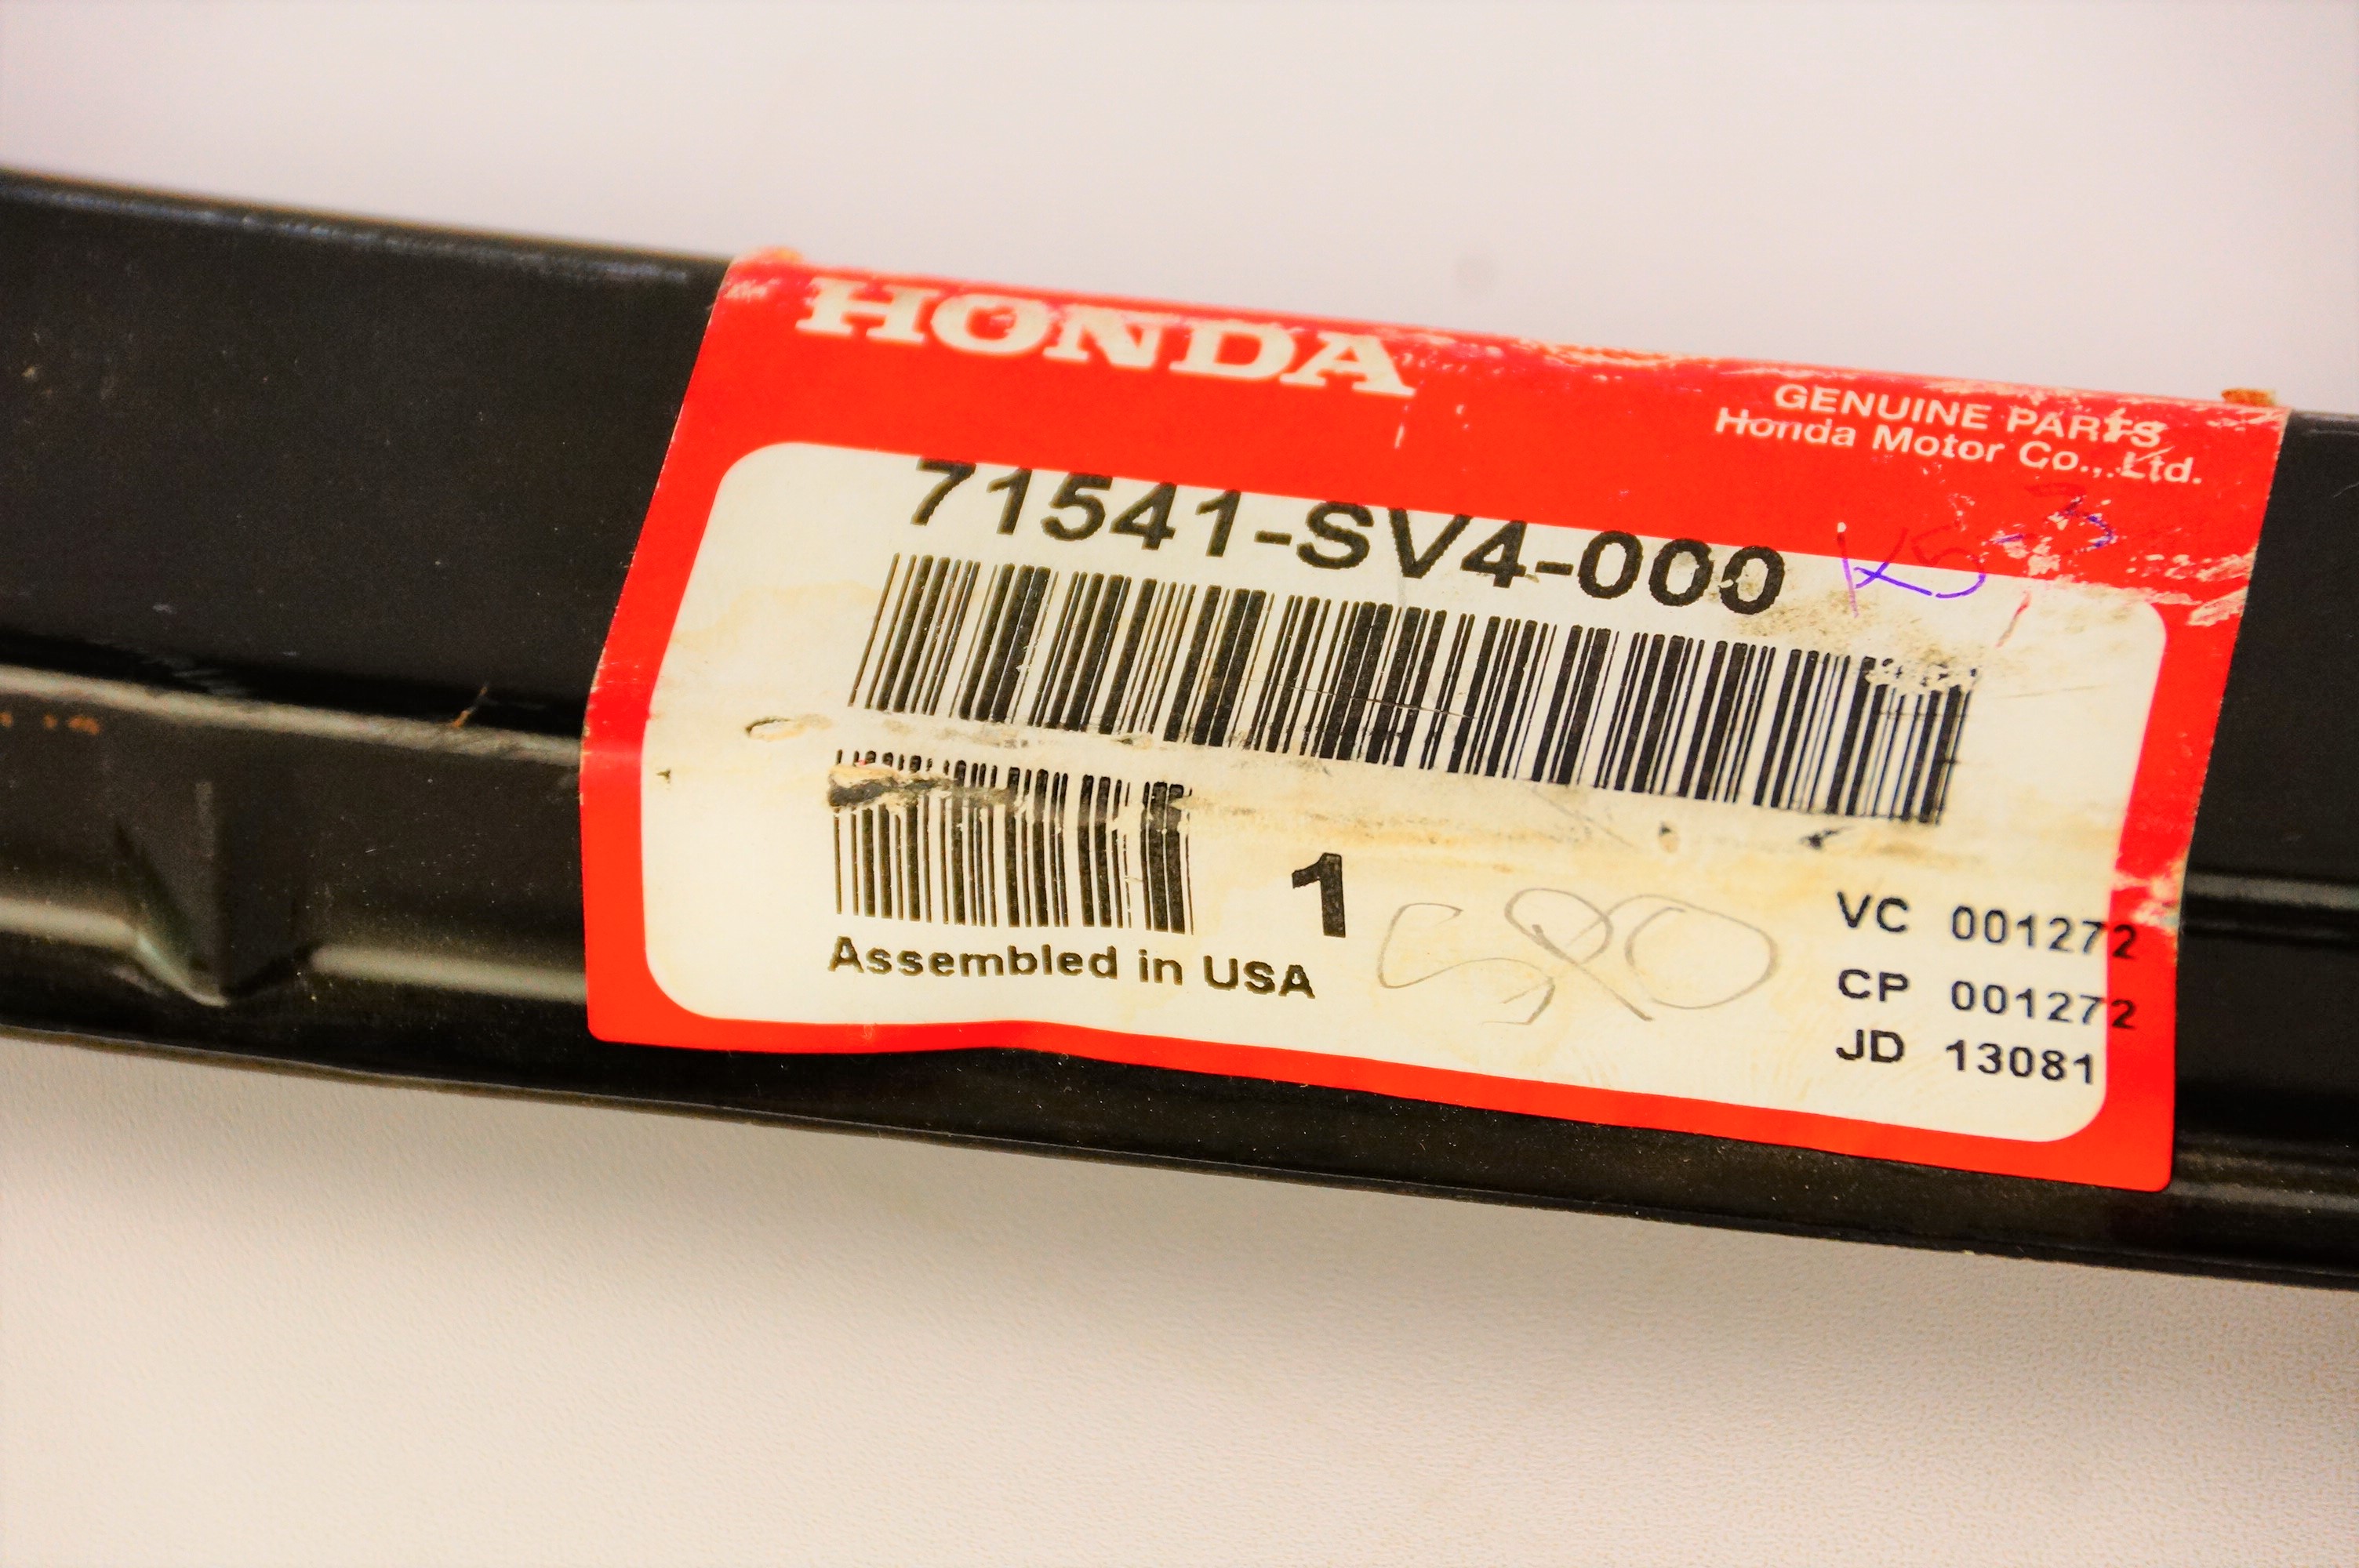 Genuine OEM 71541-SV4-000 Honda Rear Bumper Reinforcement Fast Free Shipping - image 7